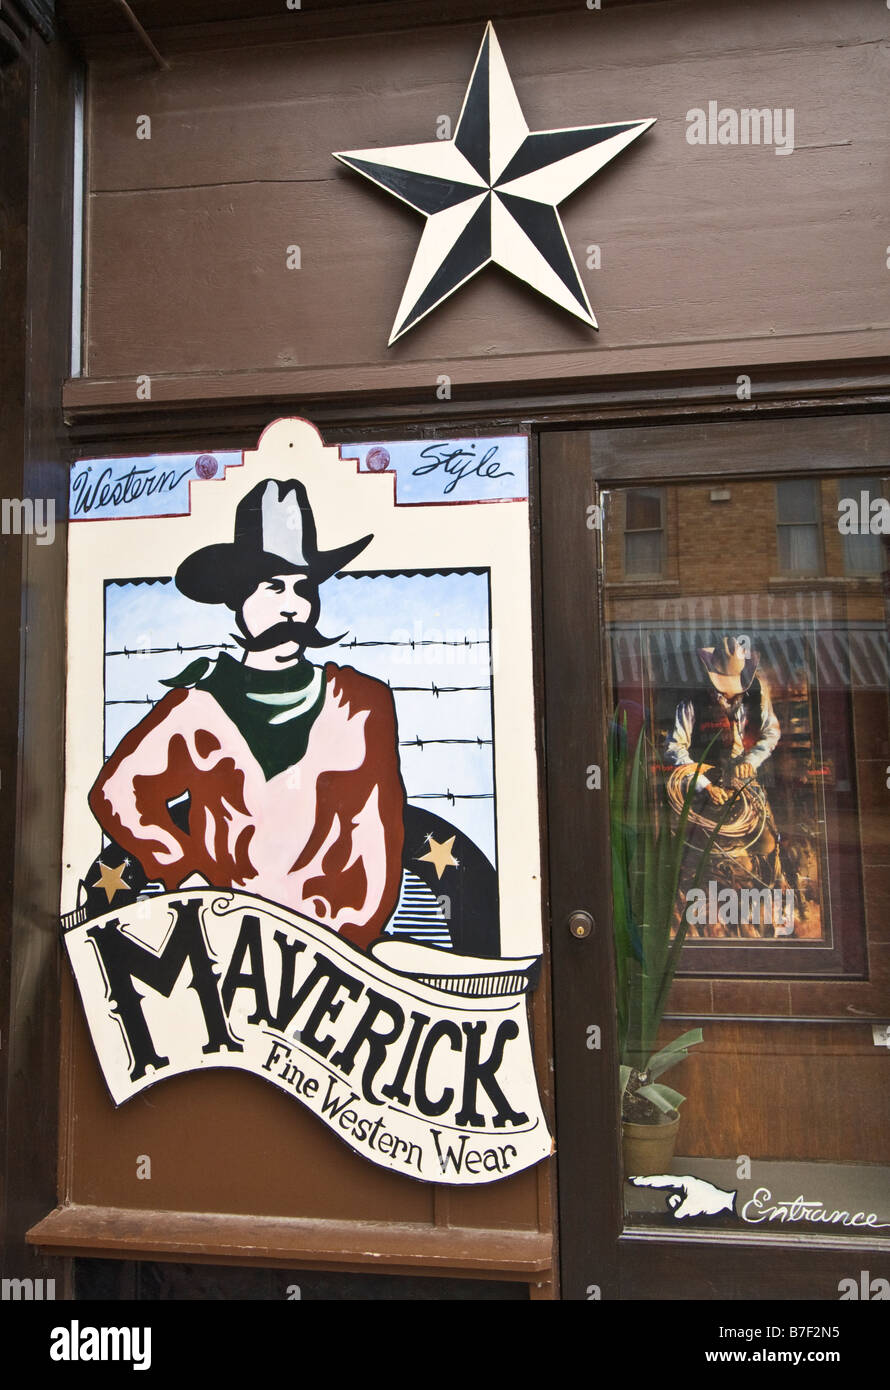 Texas Fort Worth Stockyards National Historic District Maverick western wear shop sign Stock Photo